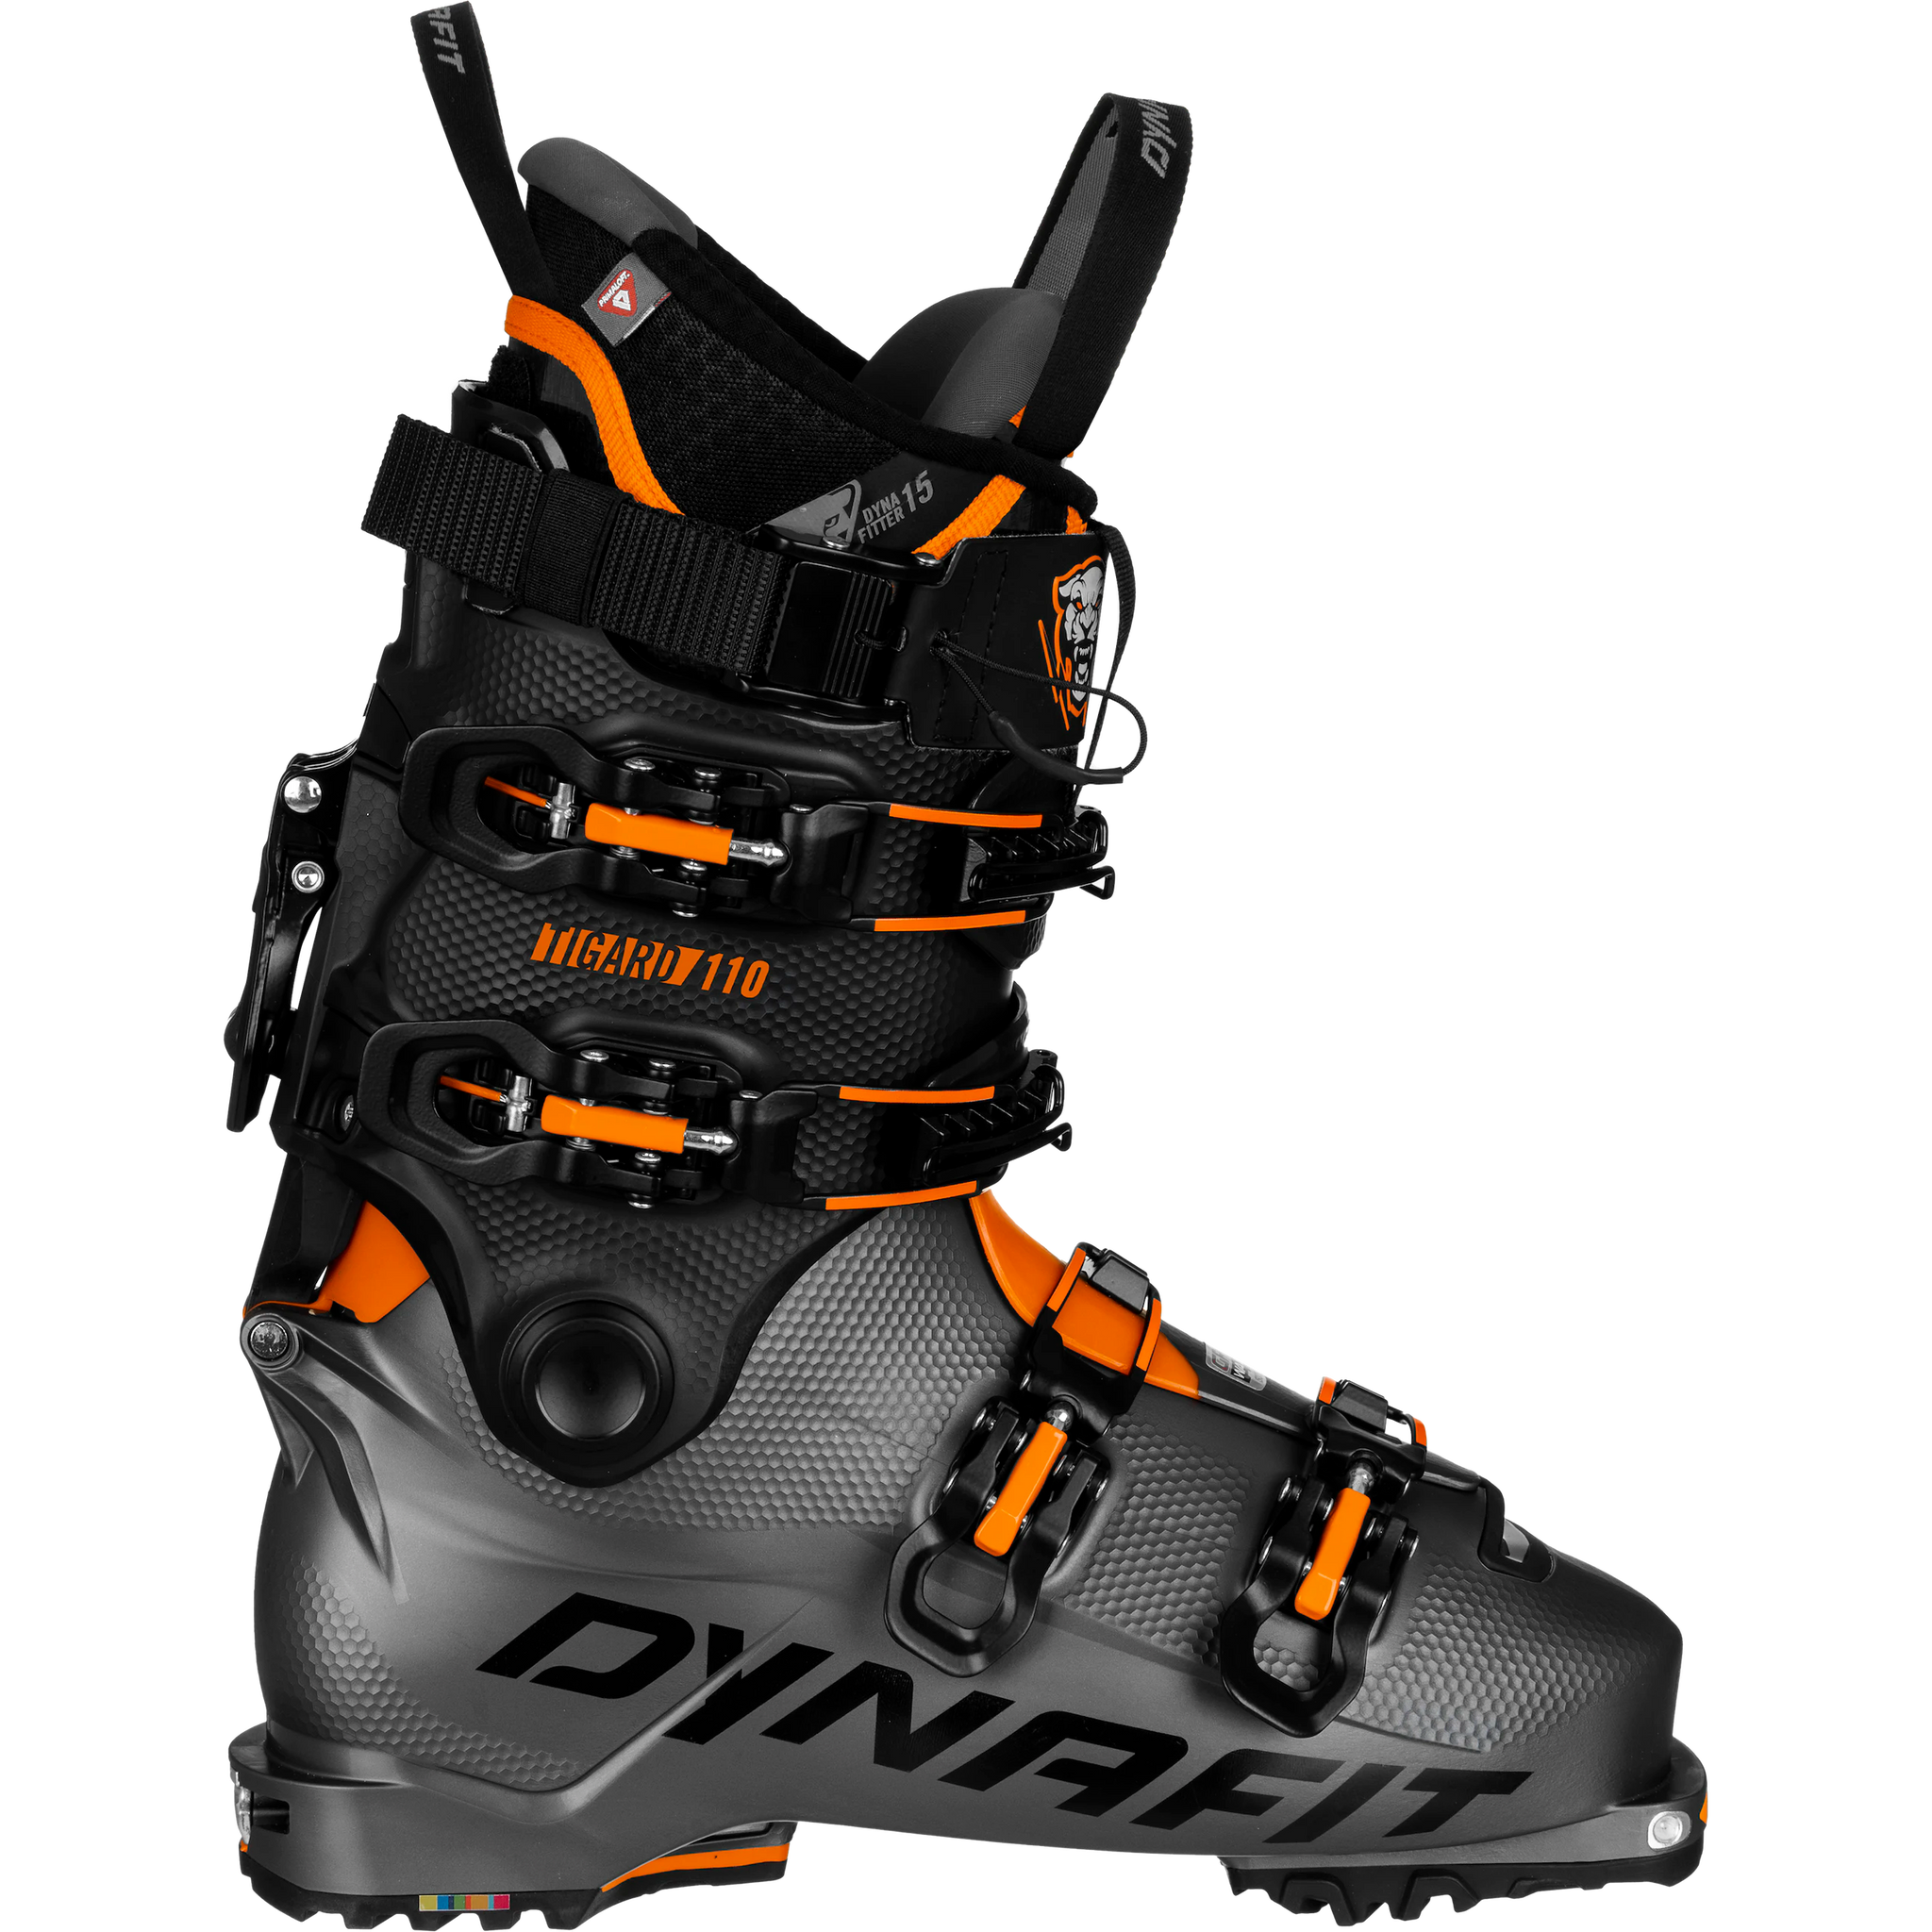 Dynafit Tigard 110 Alpine Tech Ski Boot